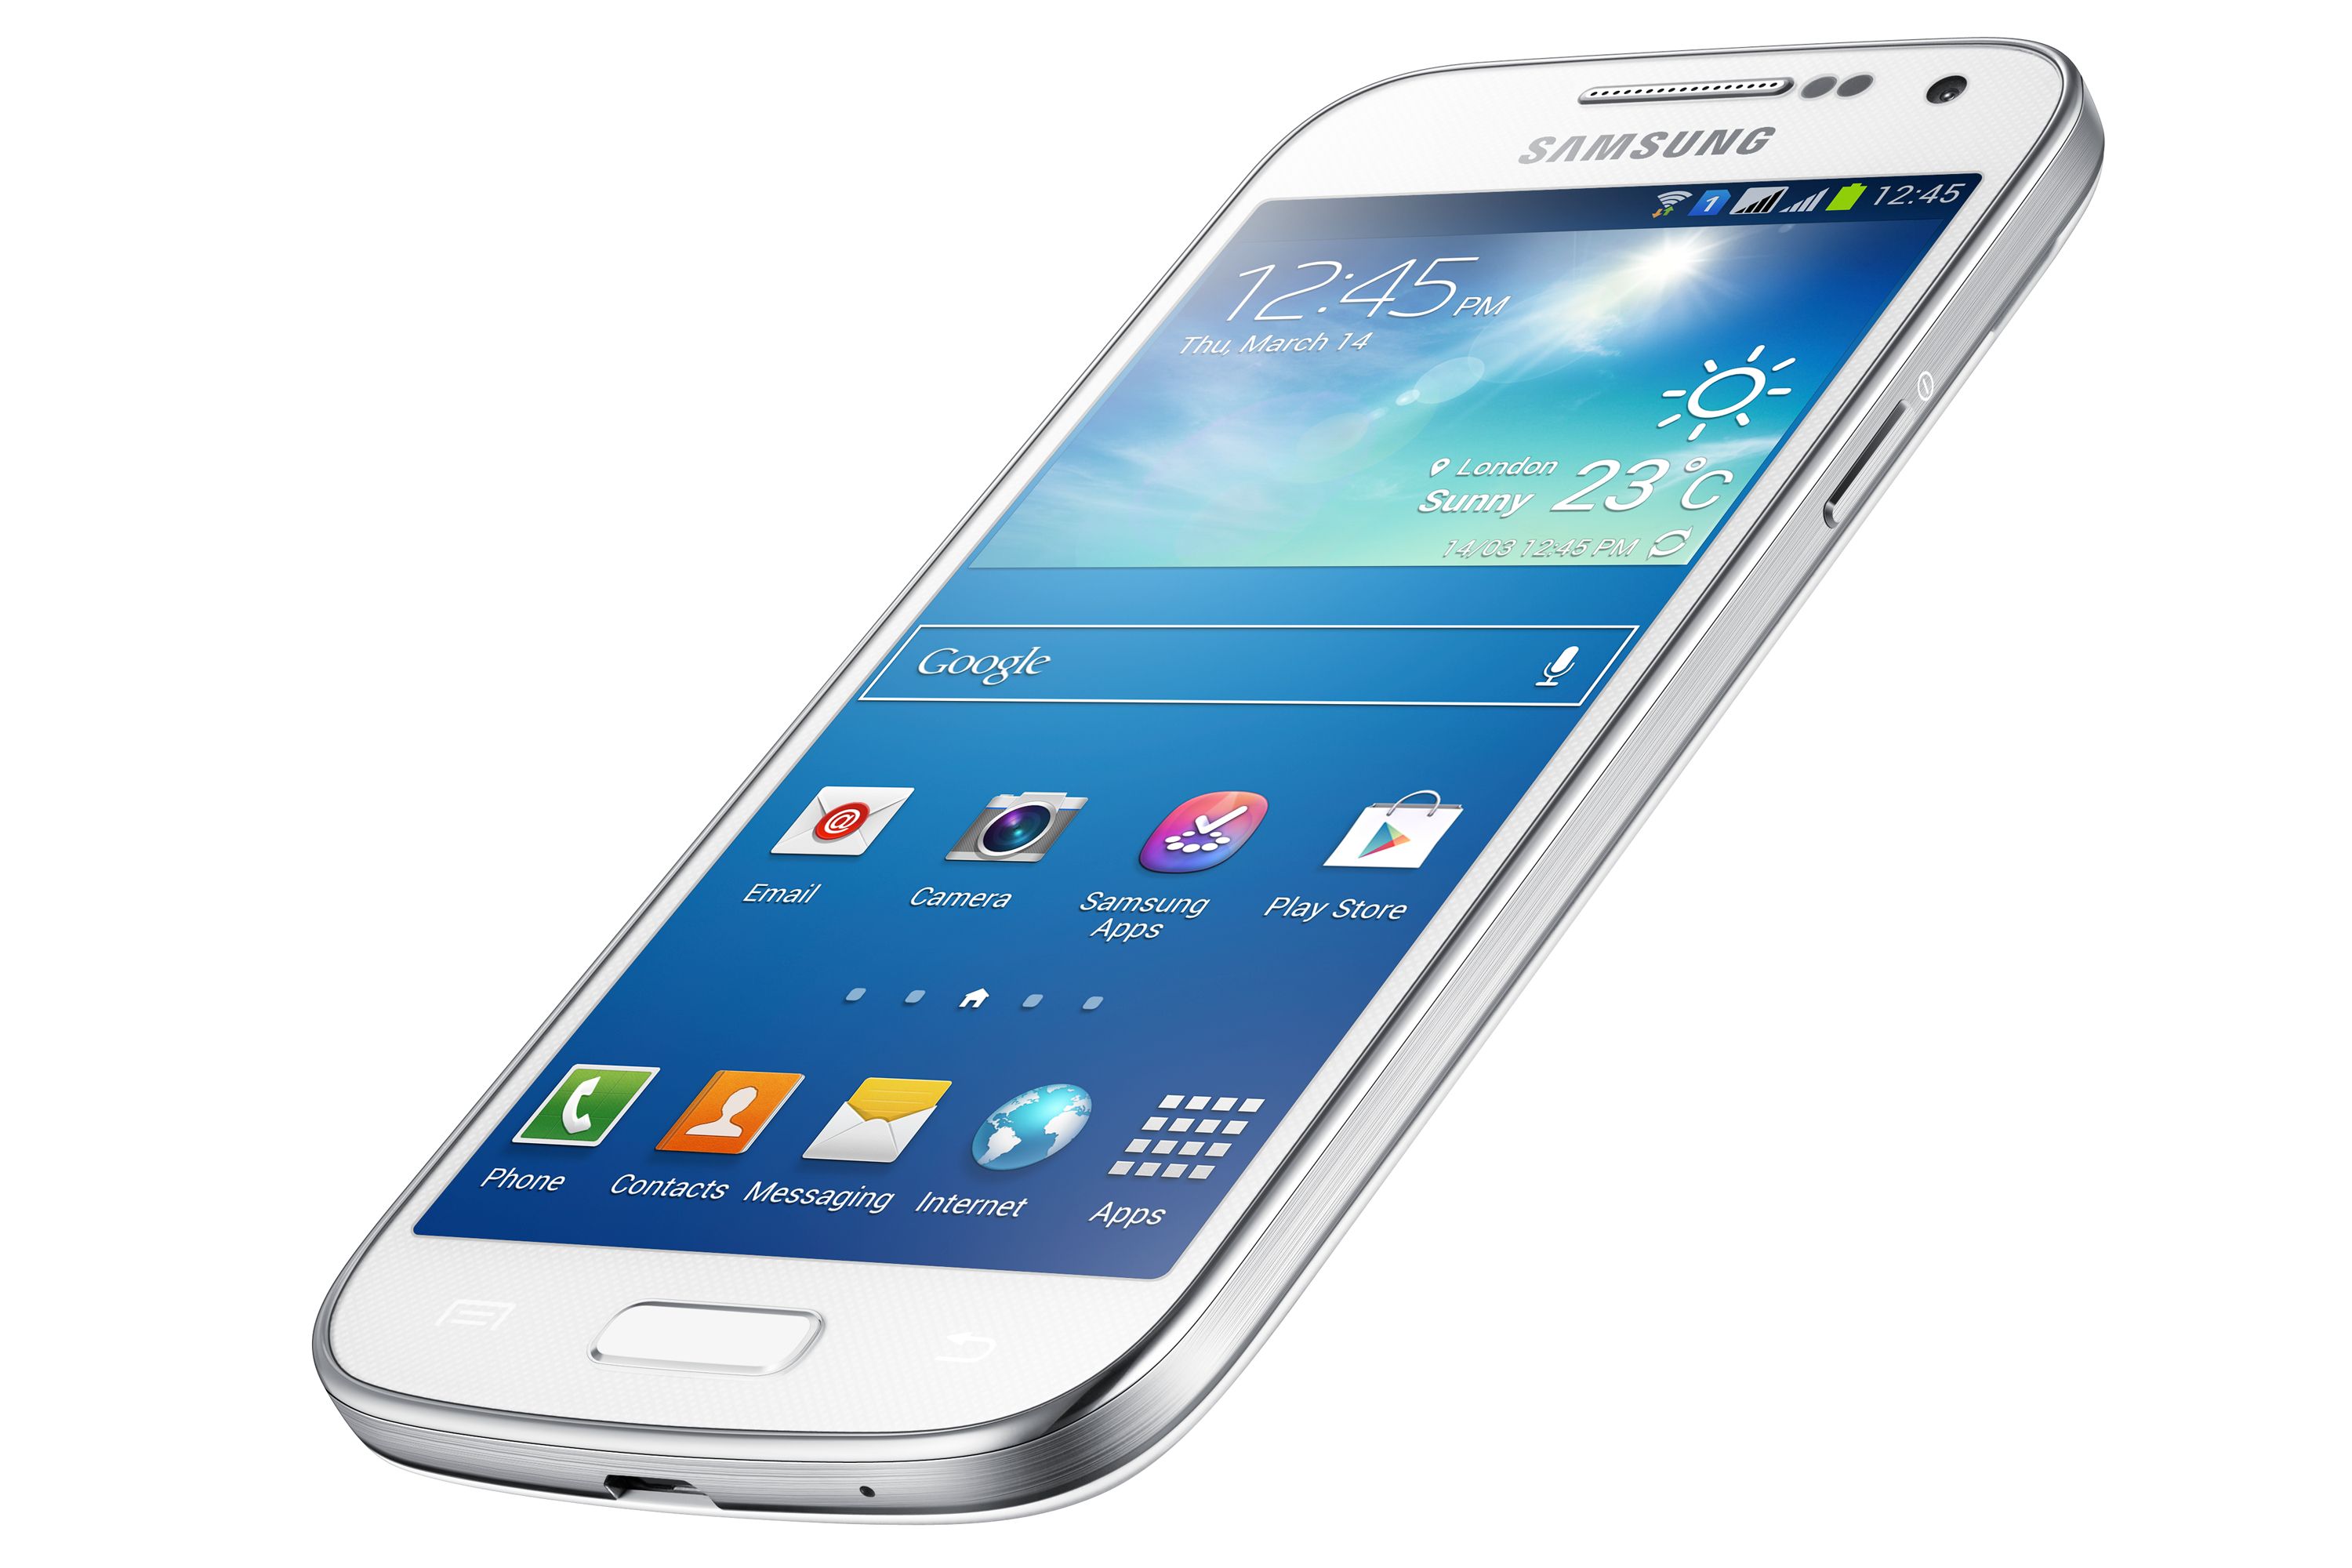 Gt s4 mini. Samsung gt-i9192. Samsung s4 Mini. Samsung Galaxy s4 Mini Duos gt-i9192. Смартфон Samsung Galaxy s4 Mini gt-i9195.